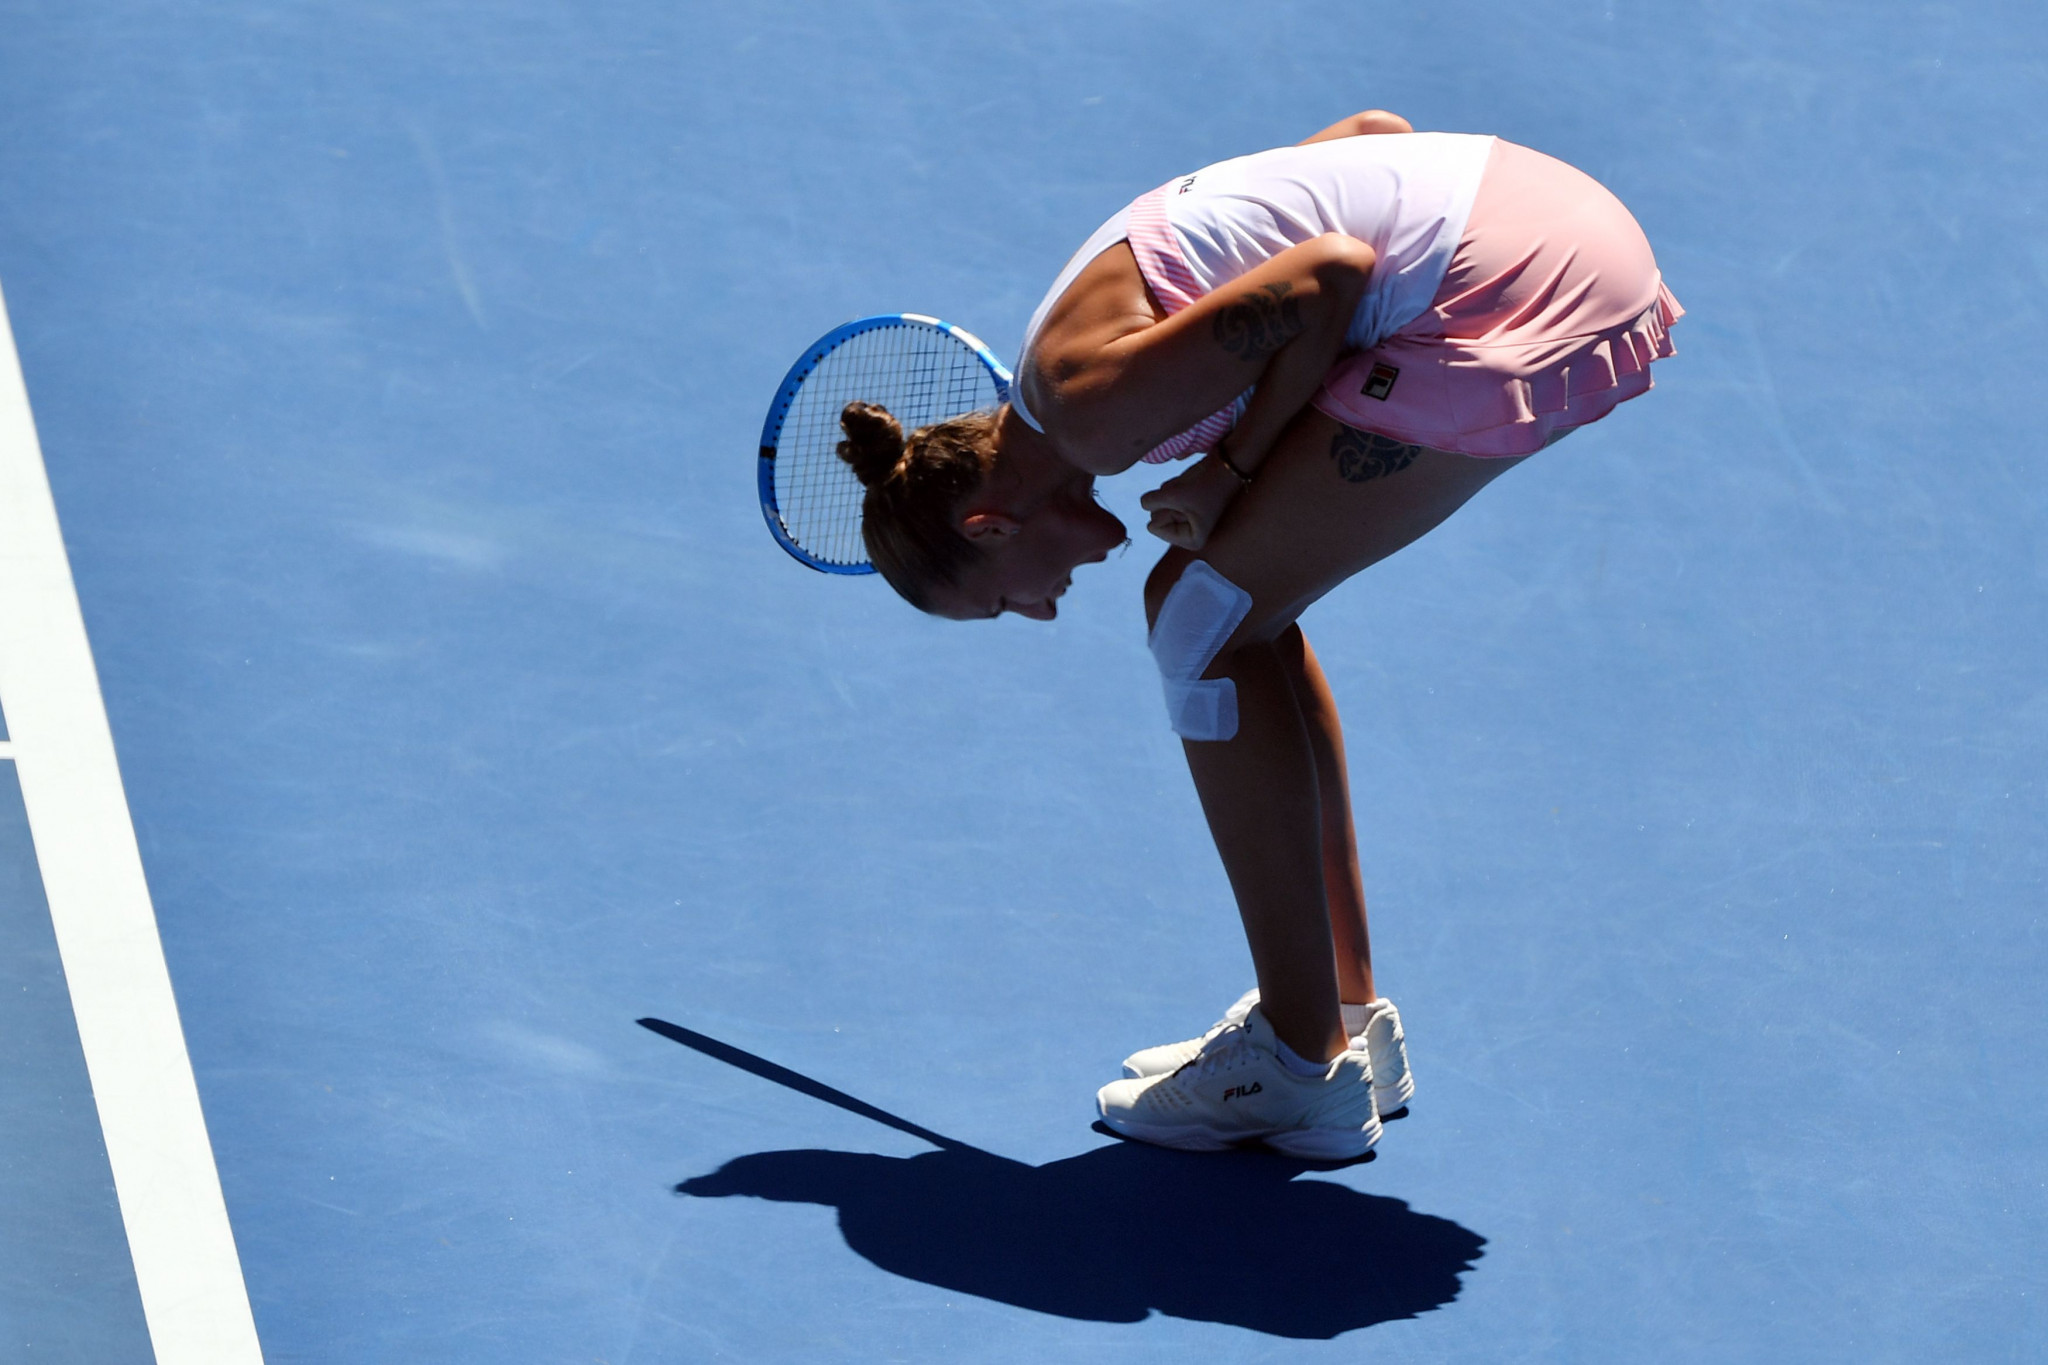 Plíšková reaches semi-finals with comeback win over Williams at Australian Open